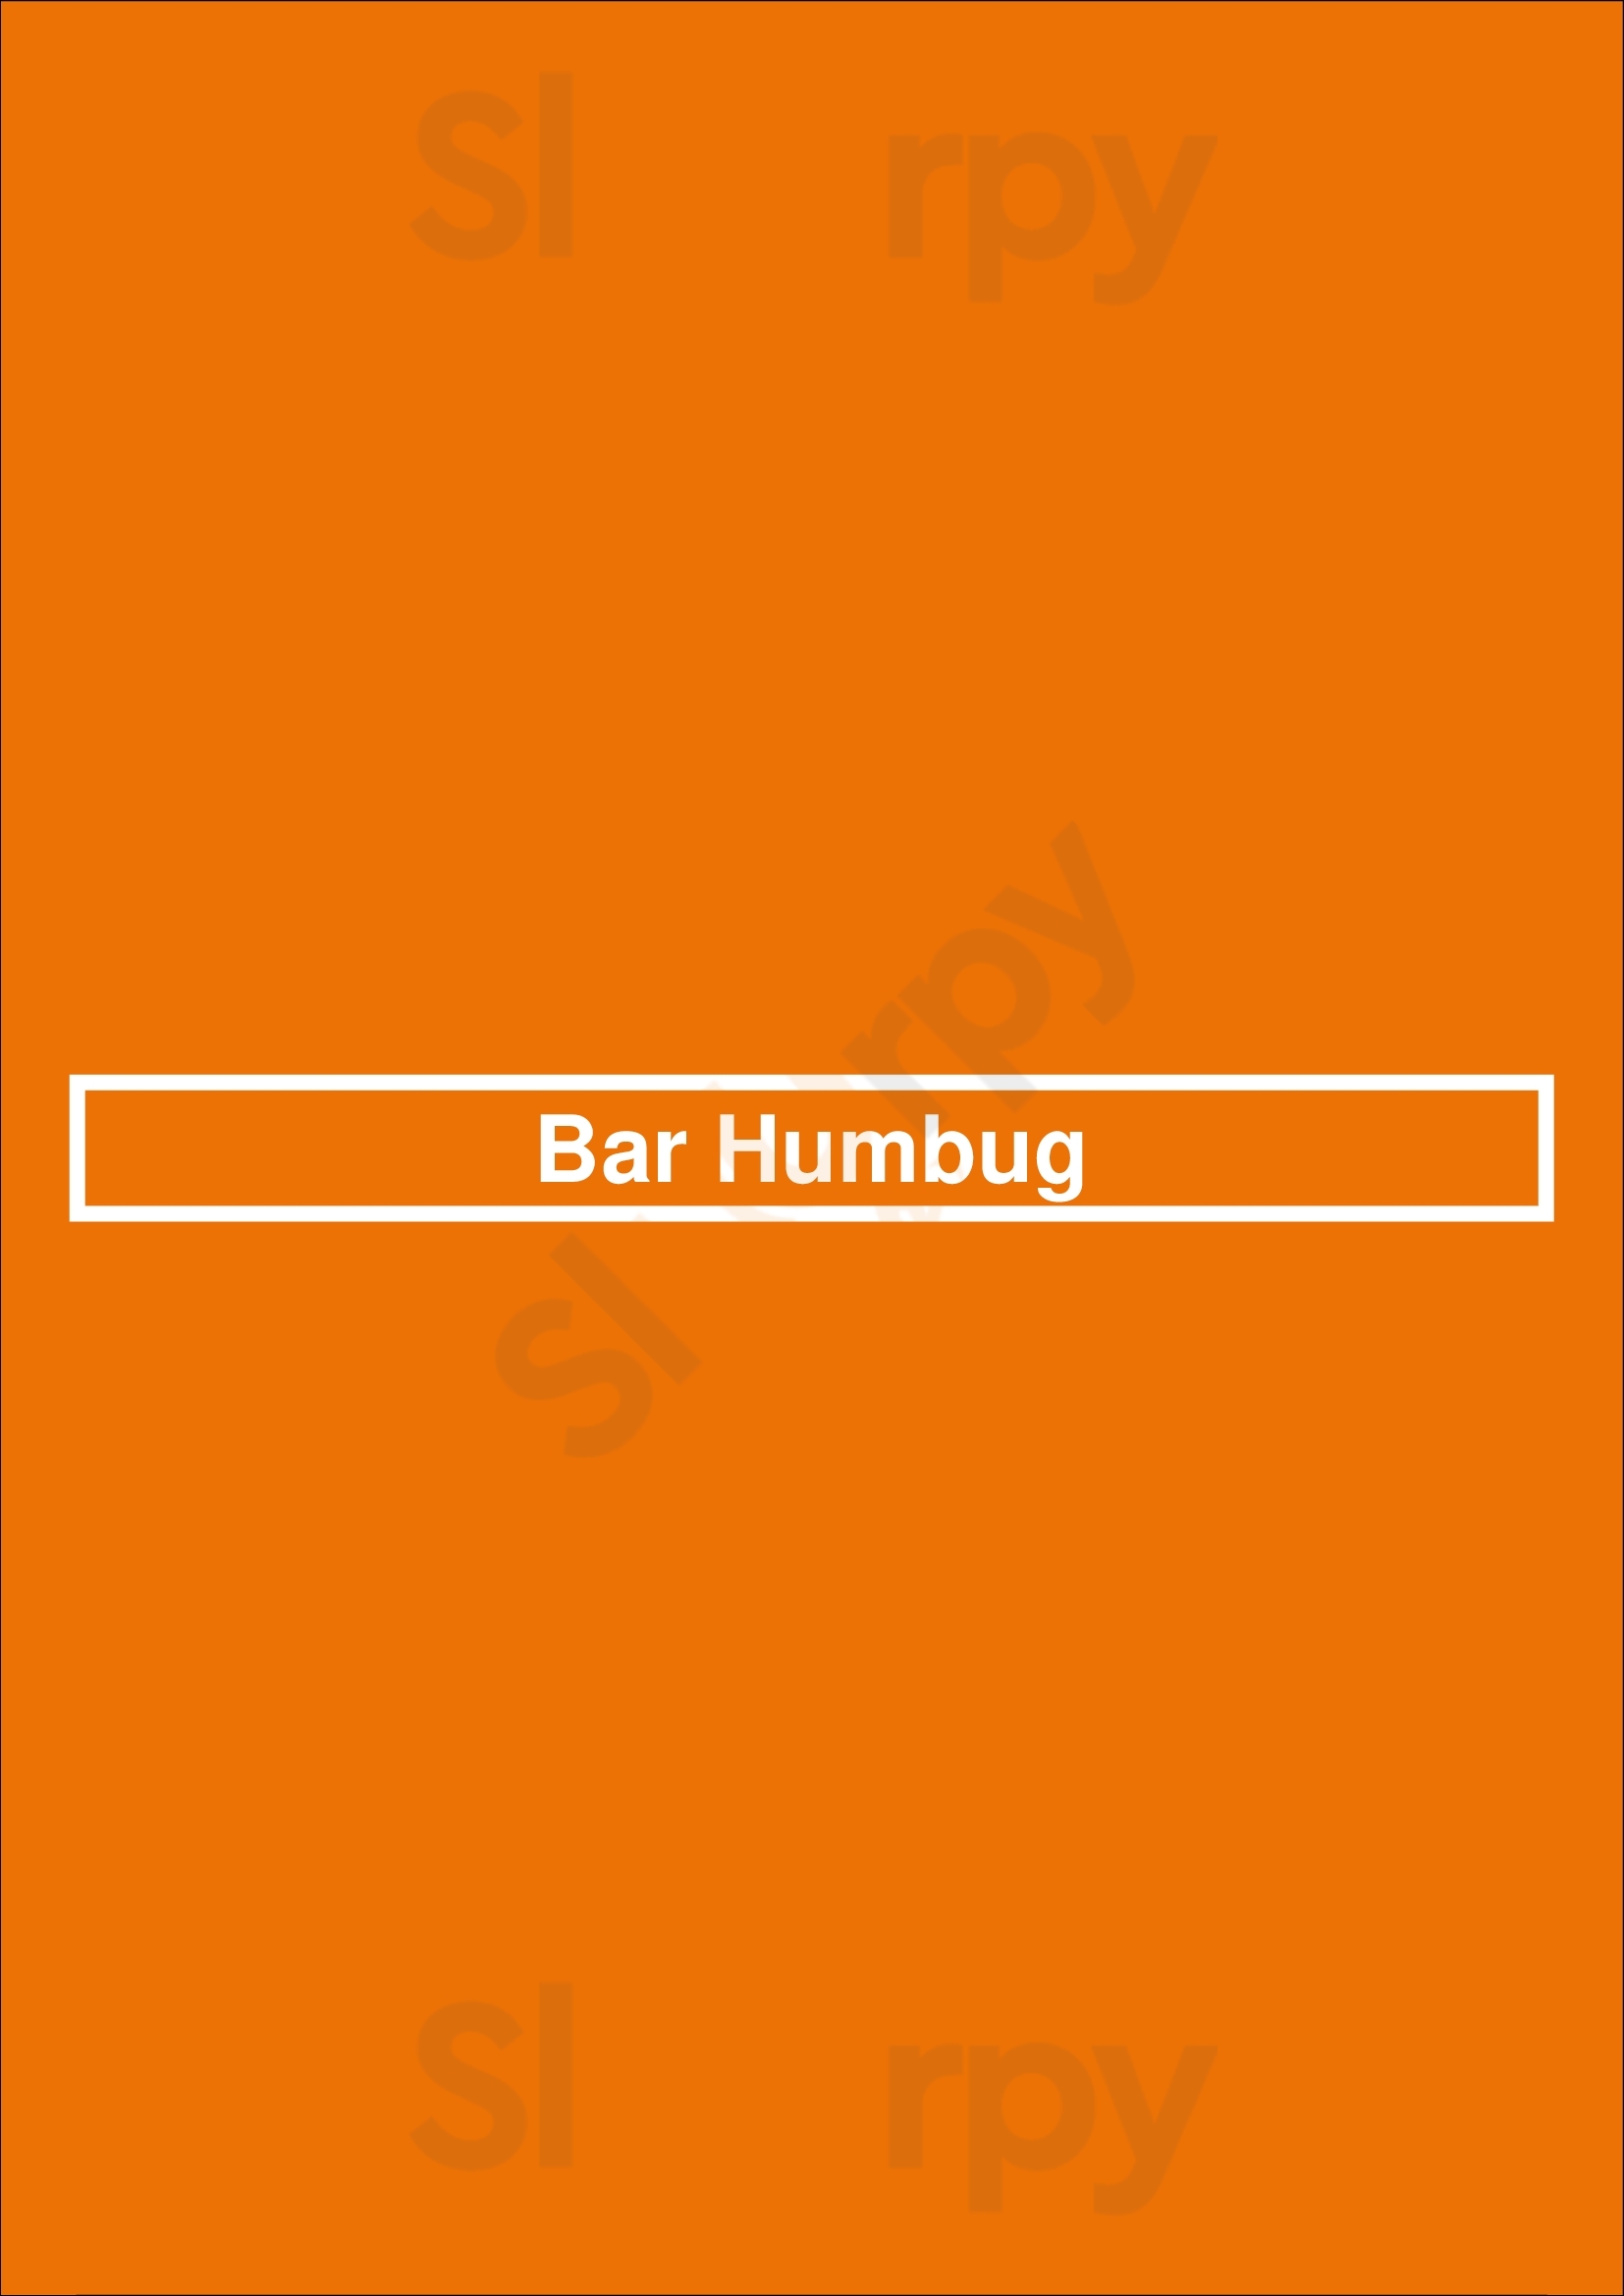 Bar Humbug Melbourne Menu - 1